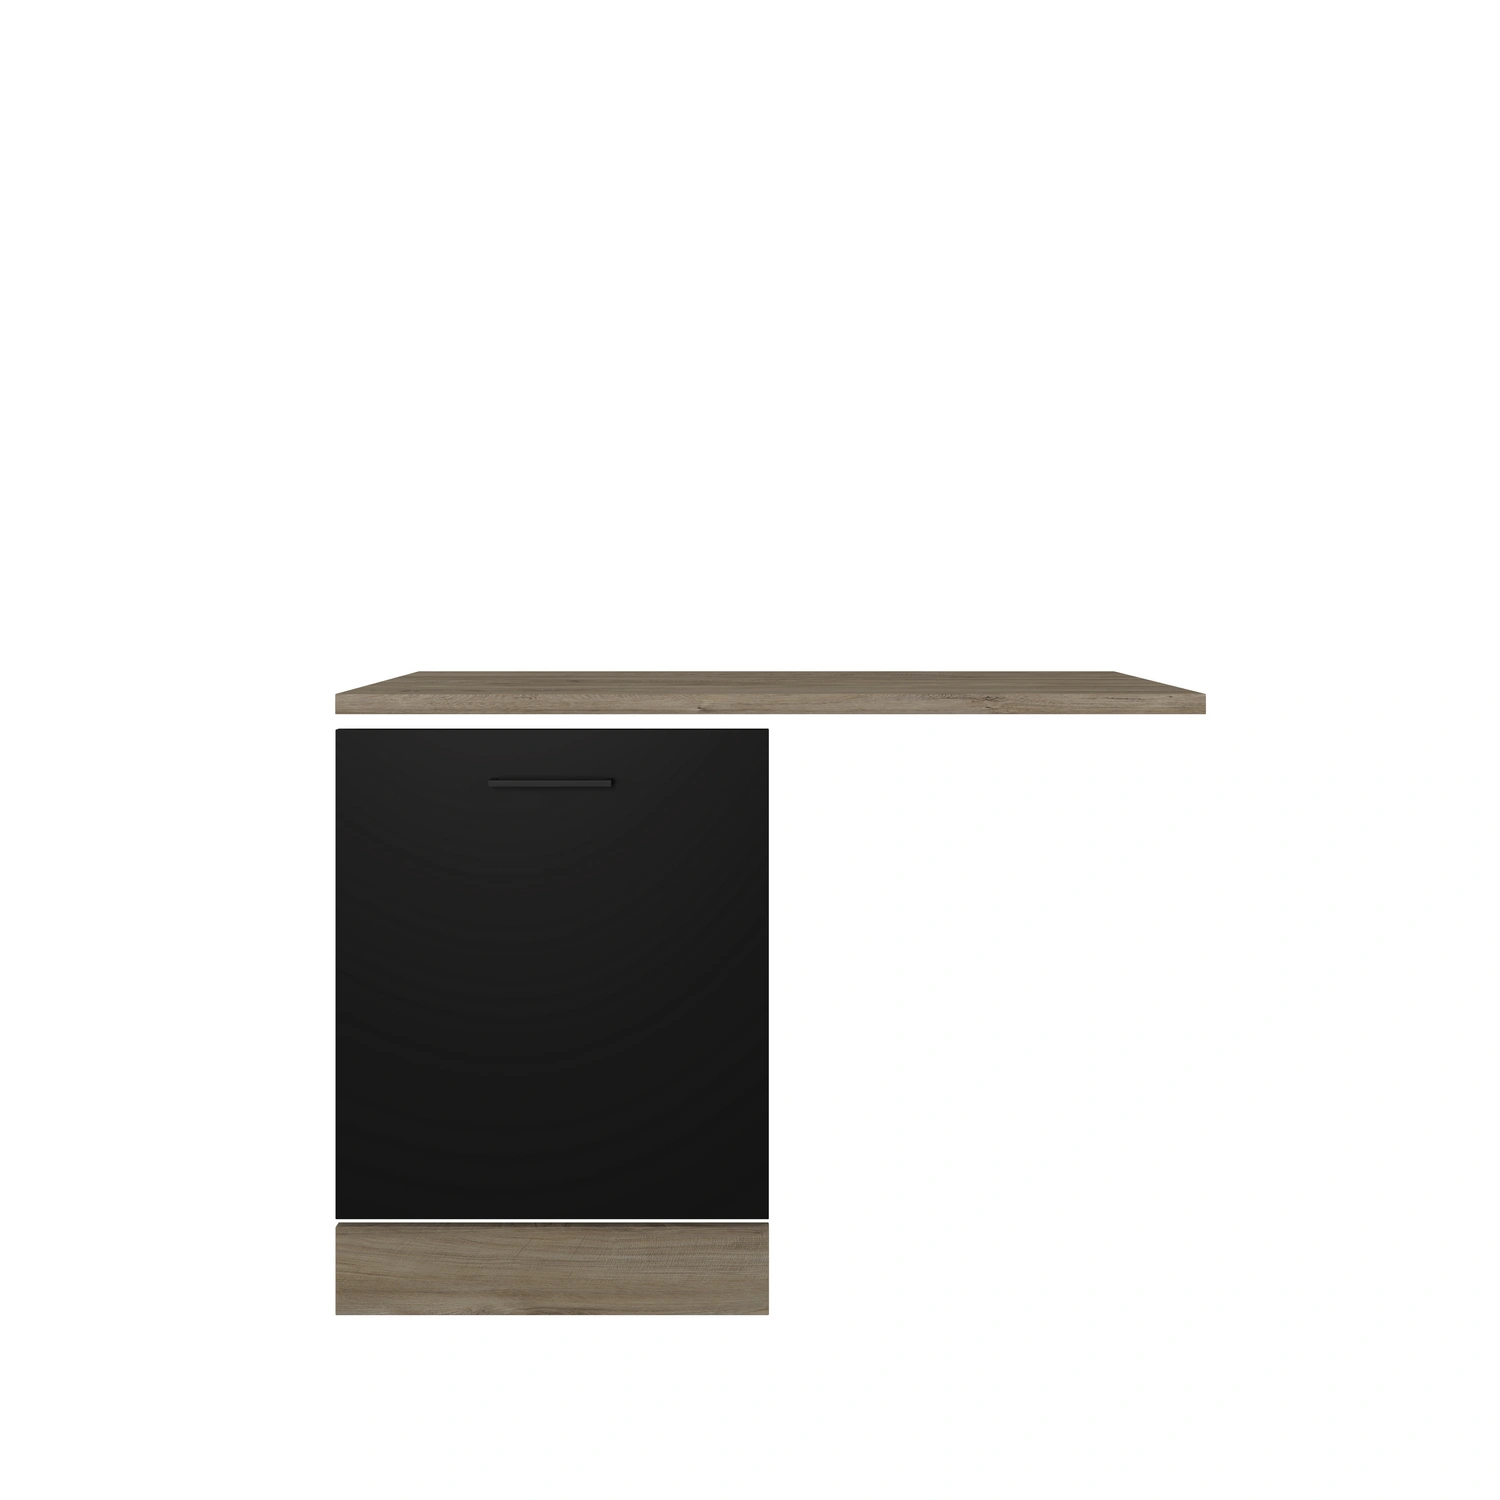 Antifingerprint-Effekt Spanplatte, mit melaminbeschichtet, »Capri«, Front Flex-Well Geschirrspüler-Paket